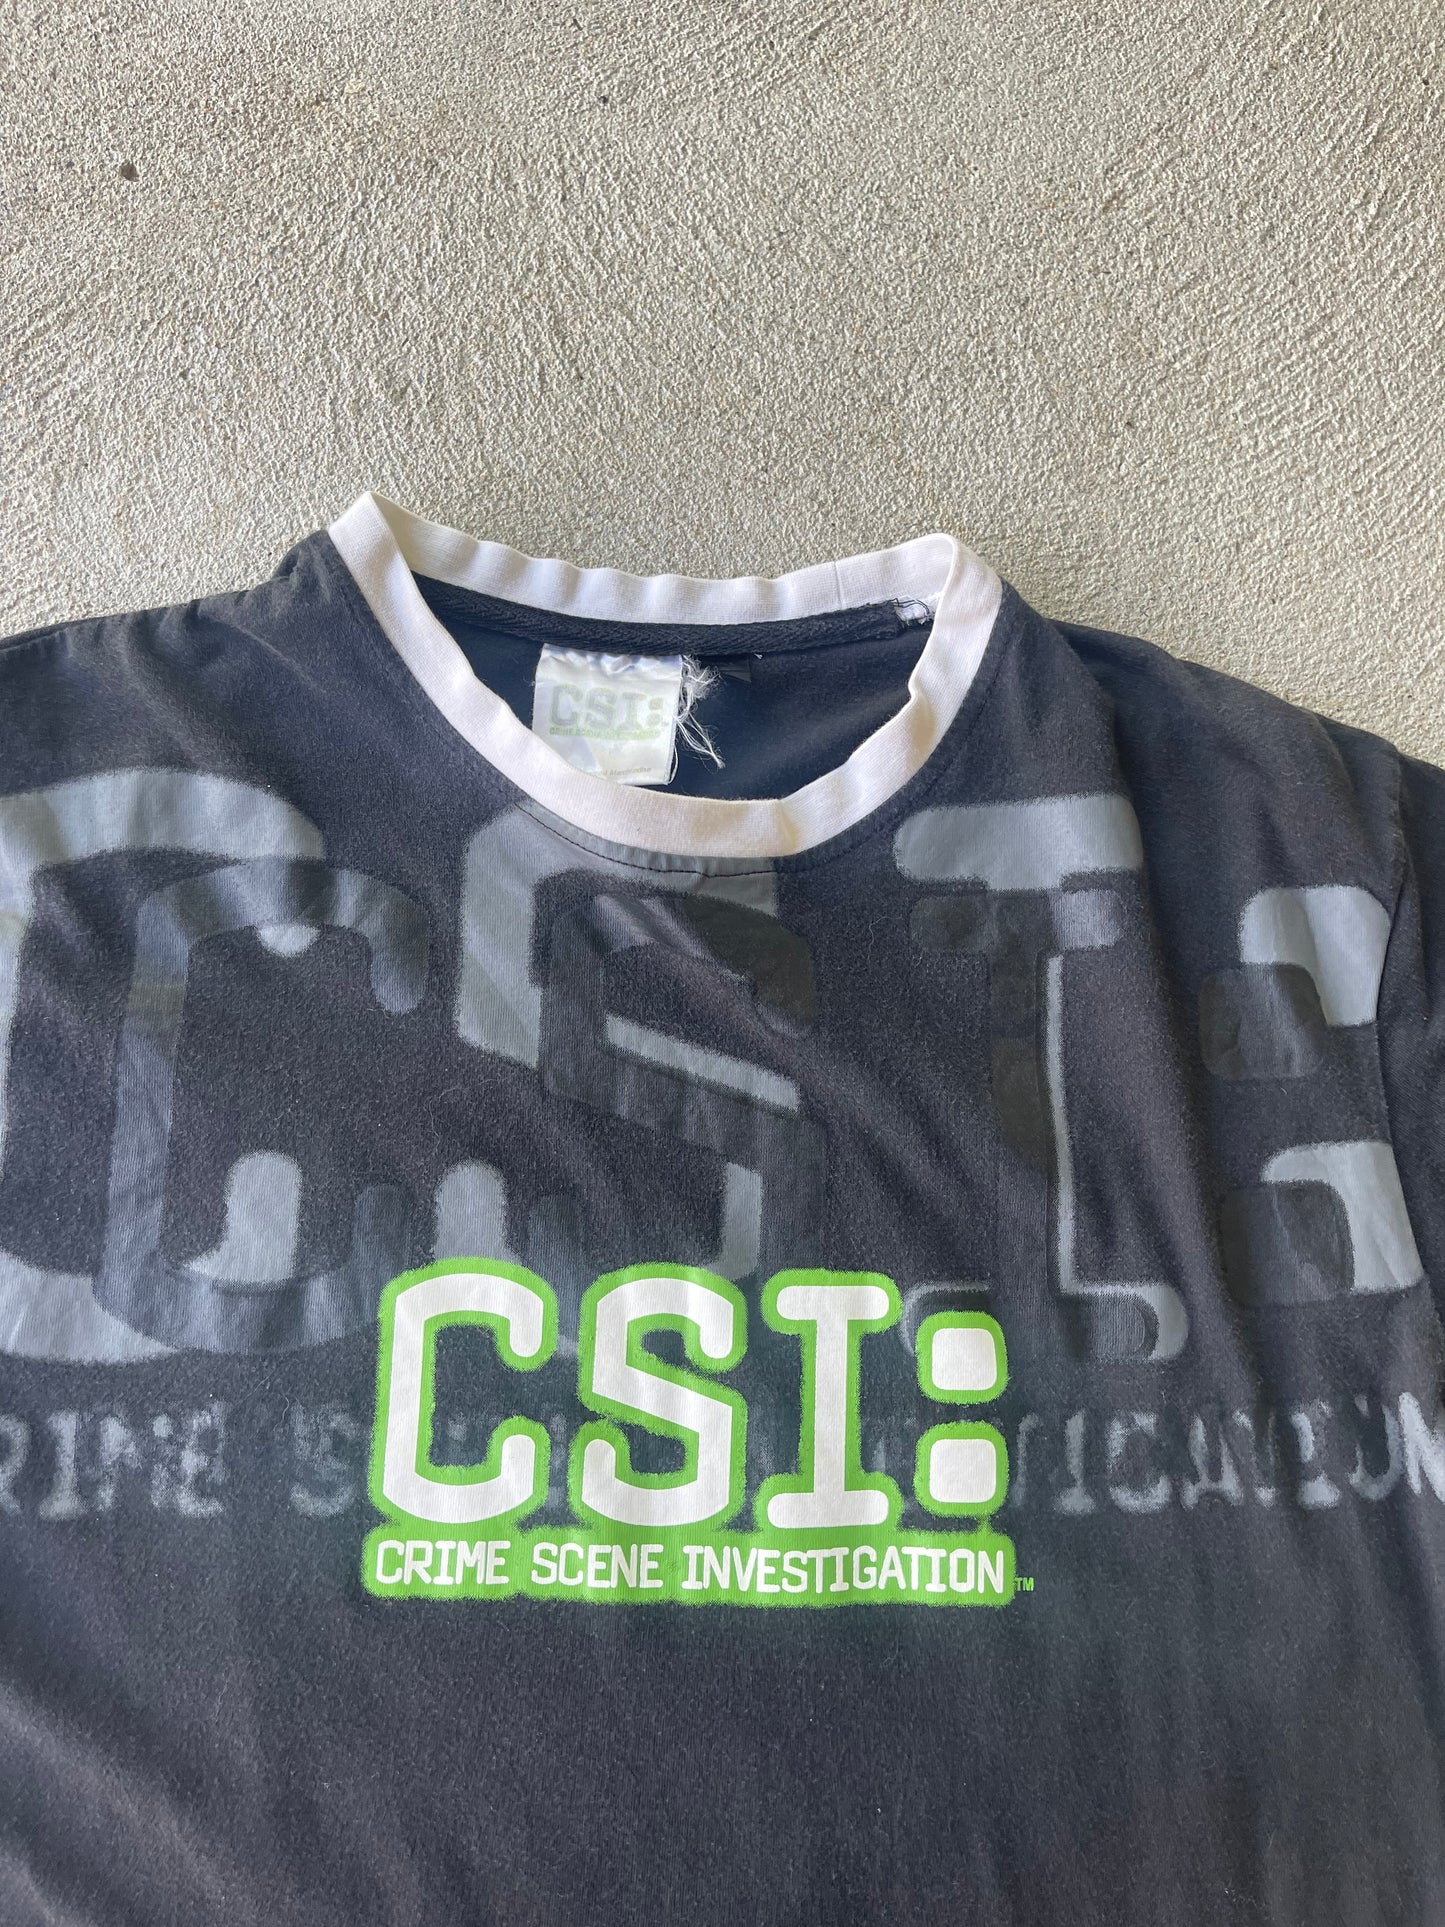 2003 CSI Tee (L)